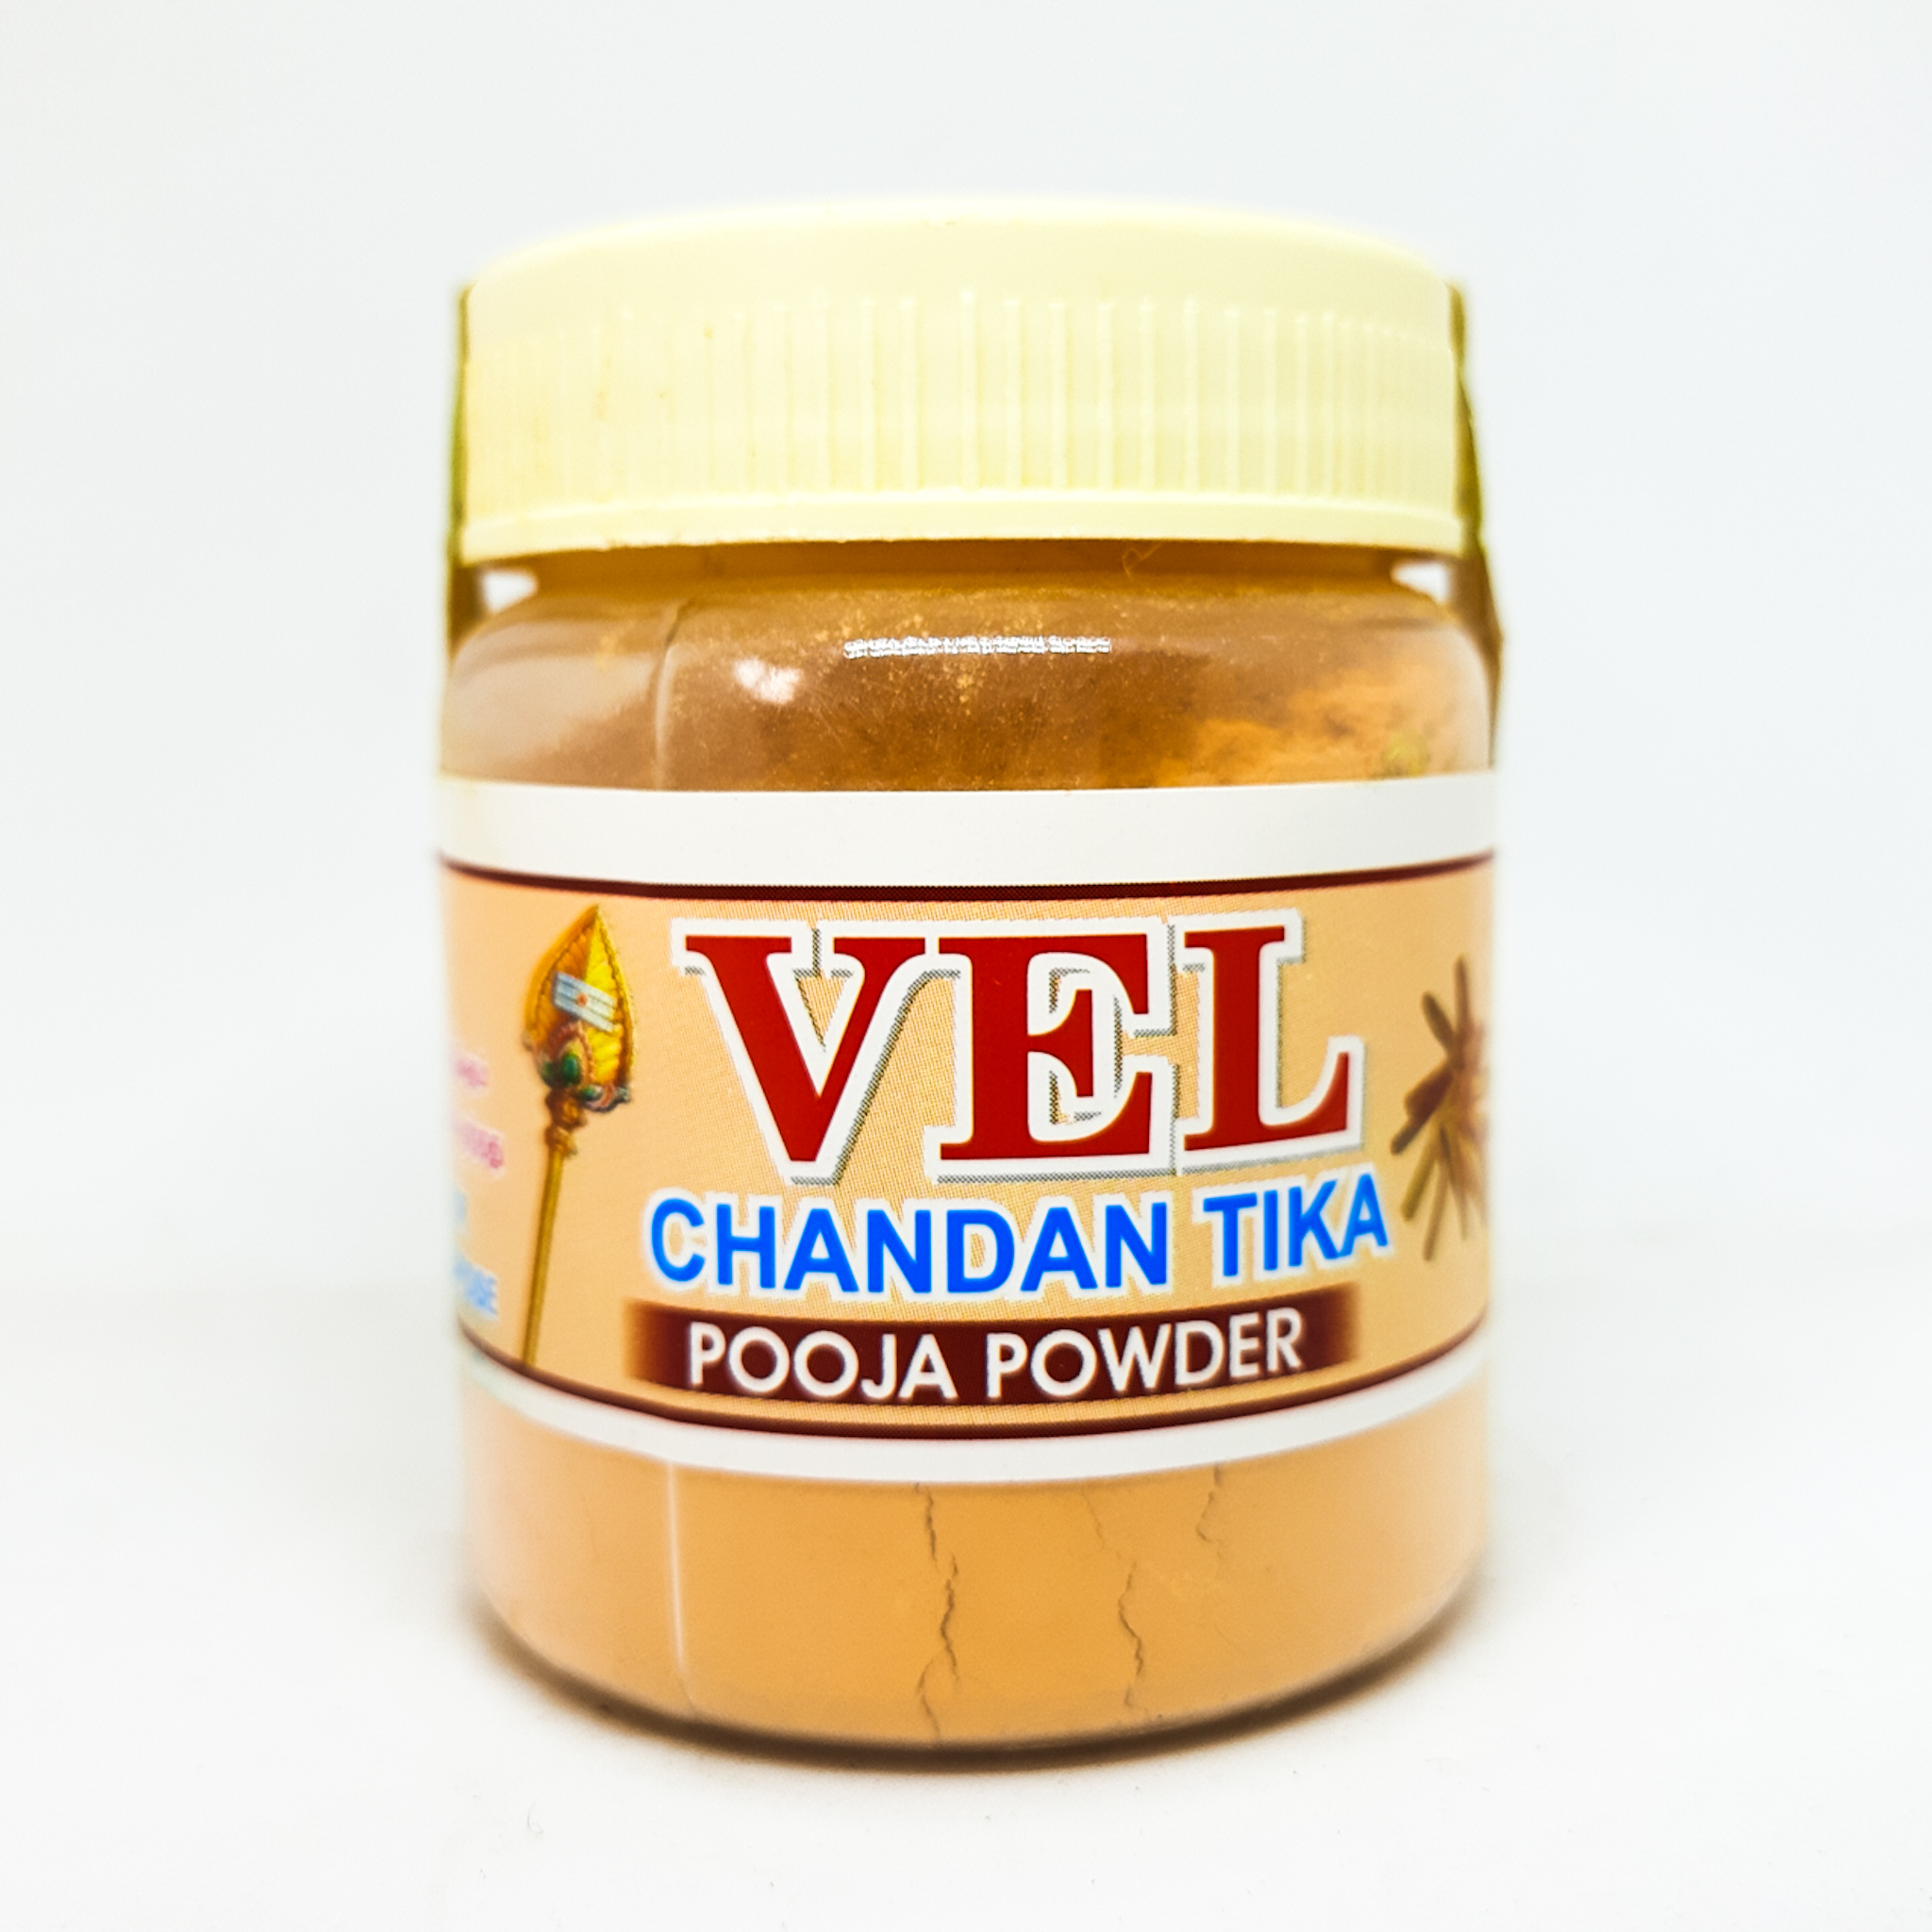 Chandan tikka powder